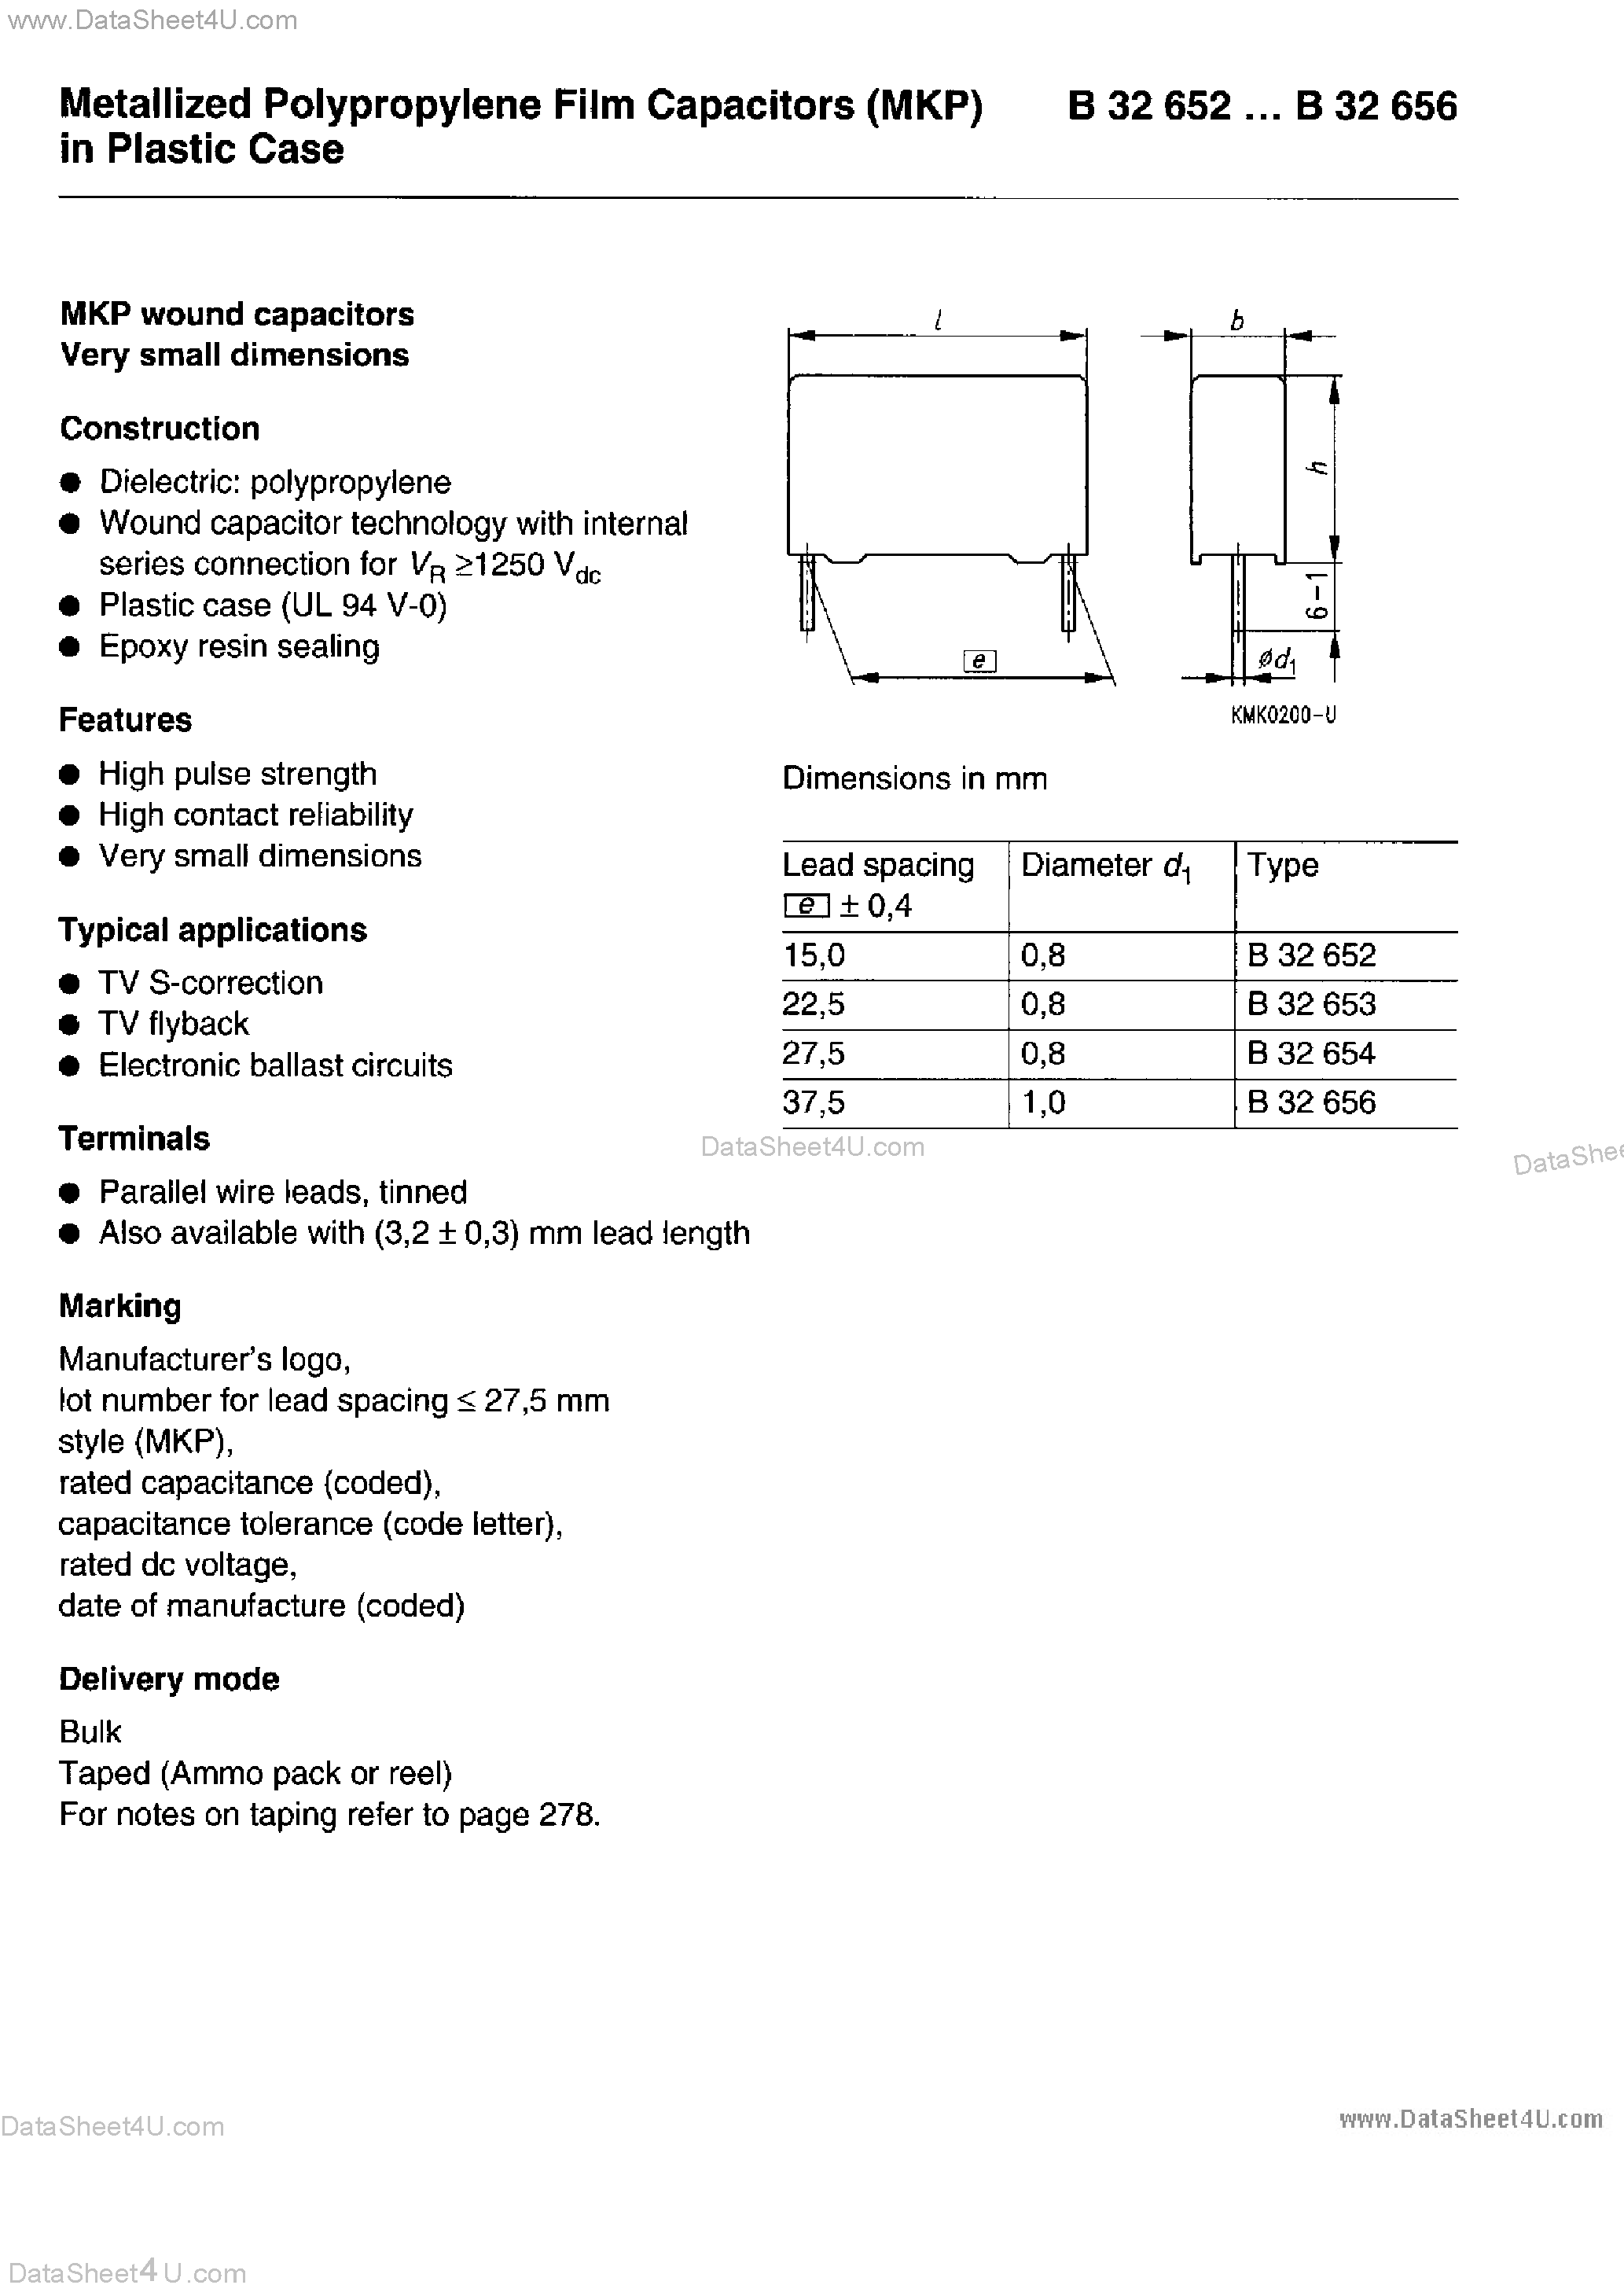 Даташит B32652-xxxxx - (B32652 - B32656) Metallized Polypropylene Film Capacitors страница 1